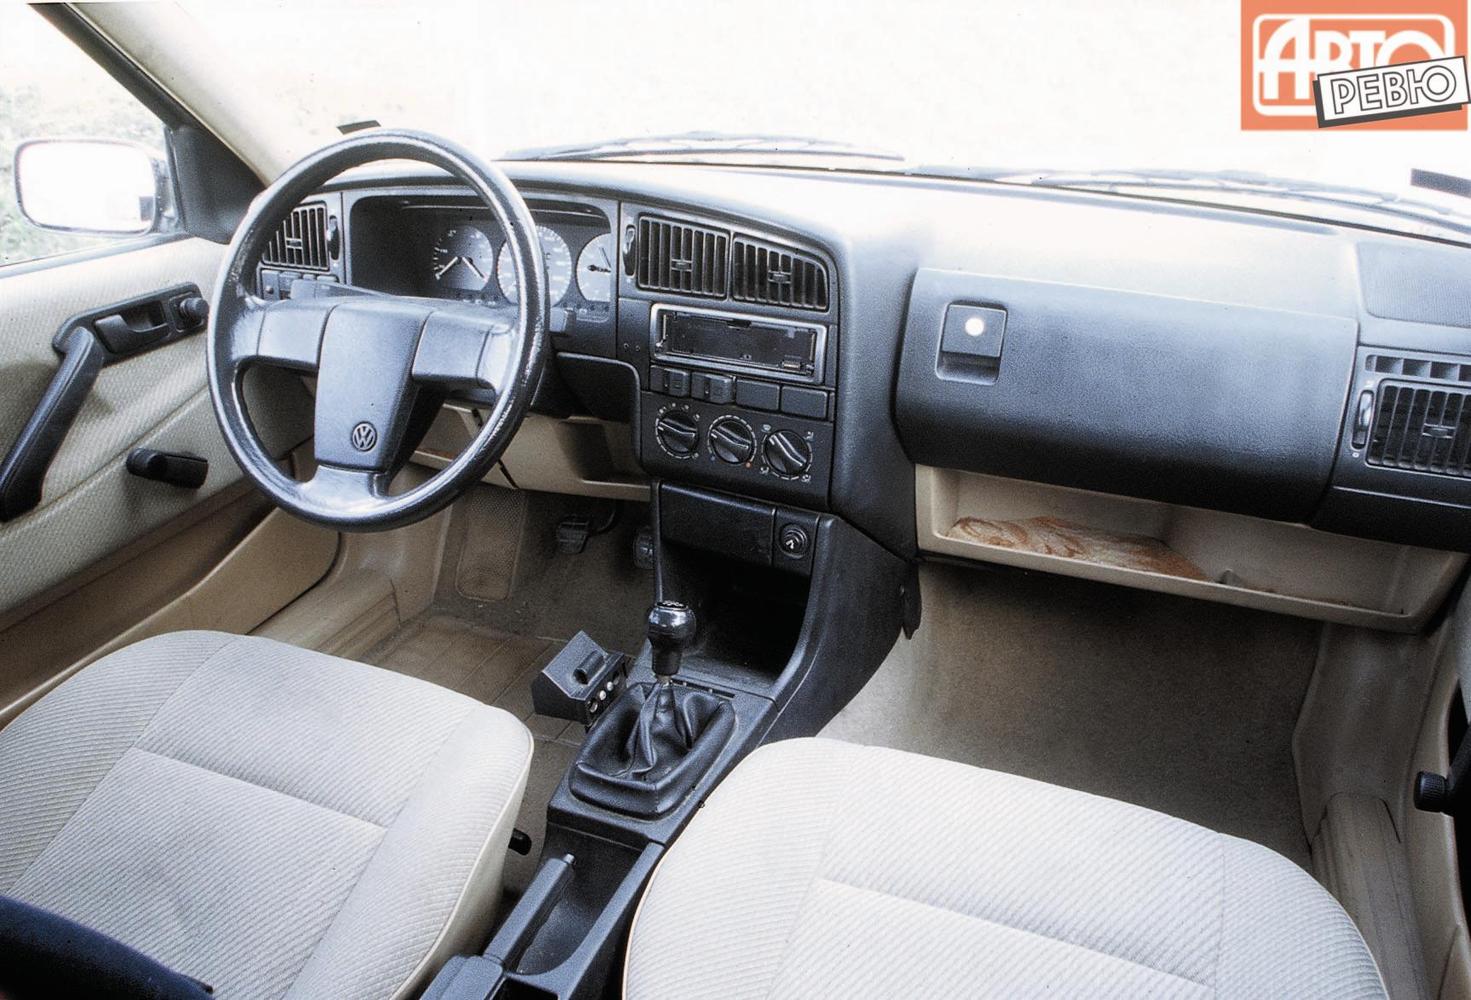 универсал Volkswagen Passat 1988 - 1993г выпуска модификация 1.6 MT (72 л.с.)